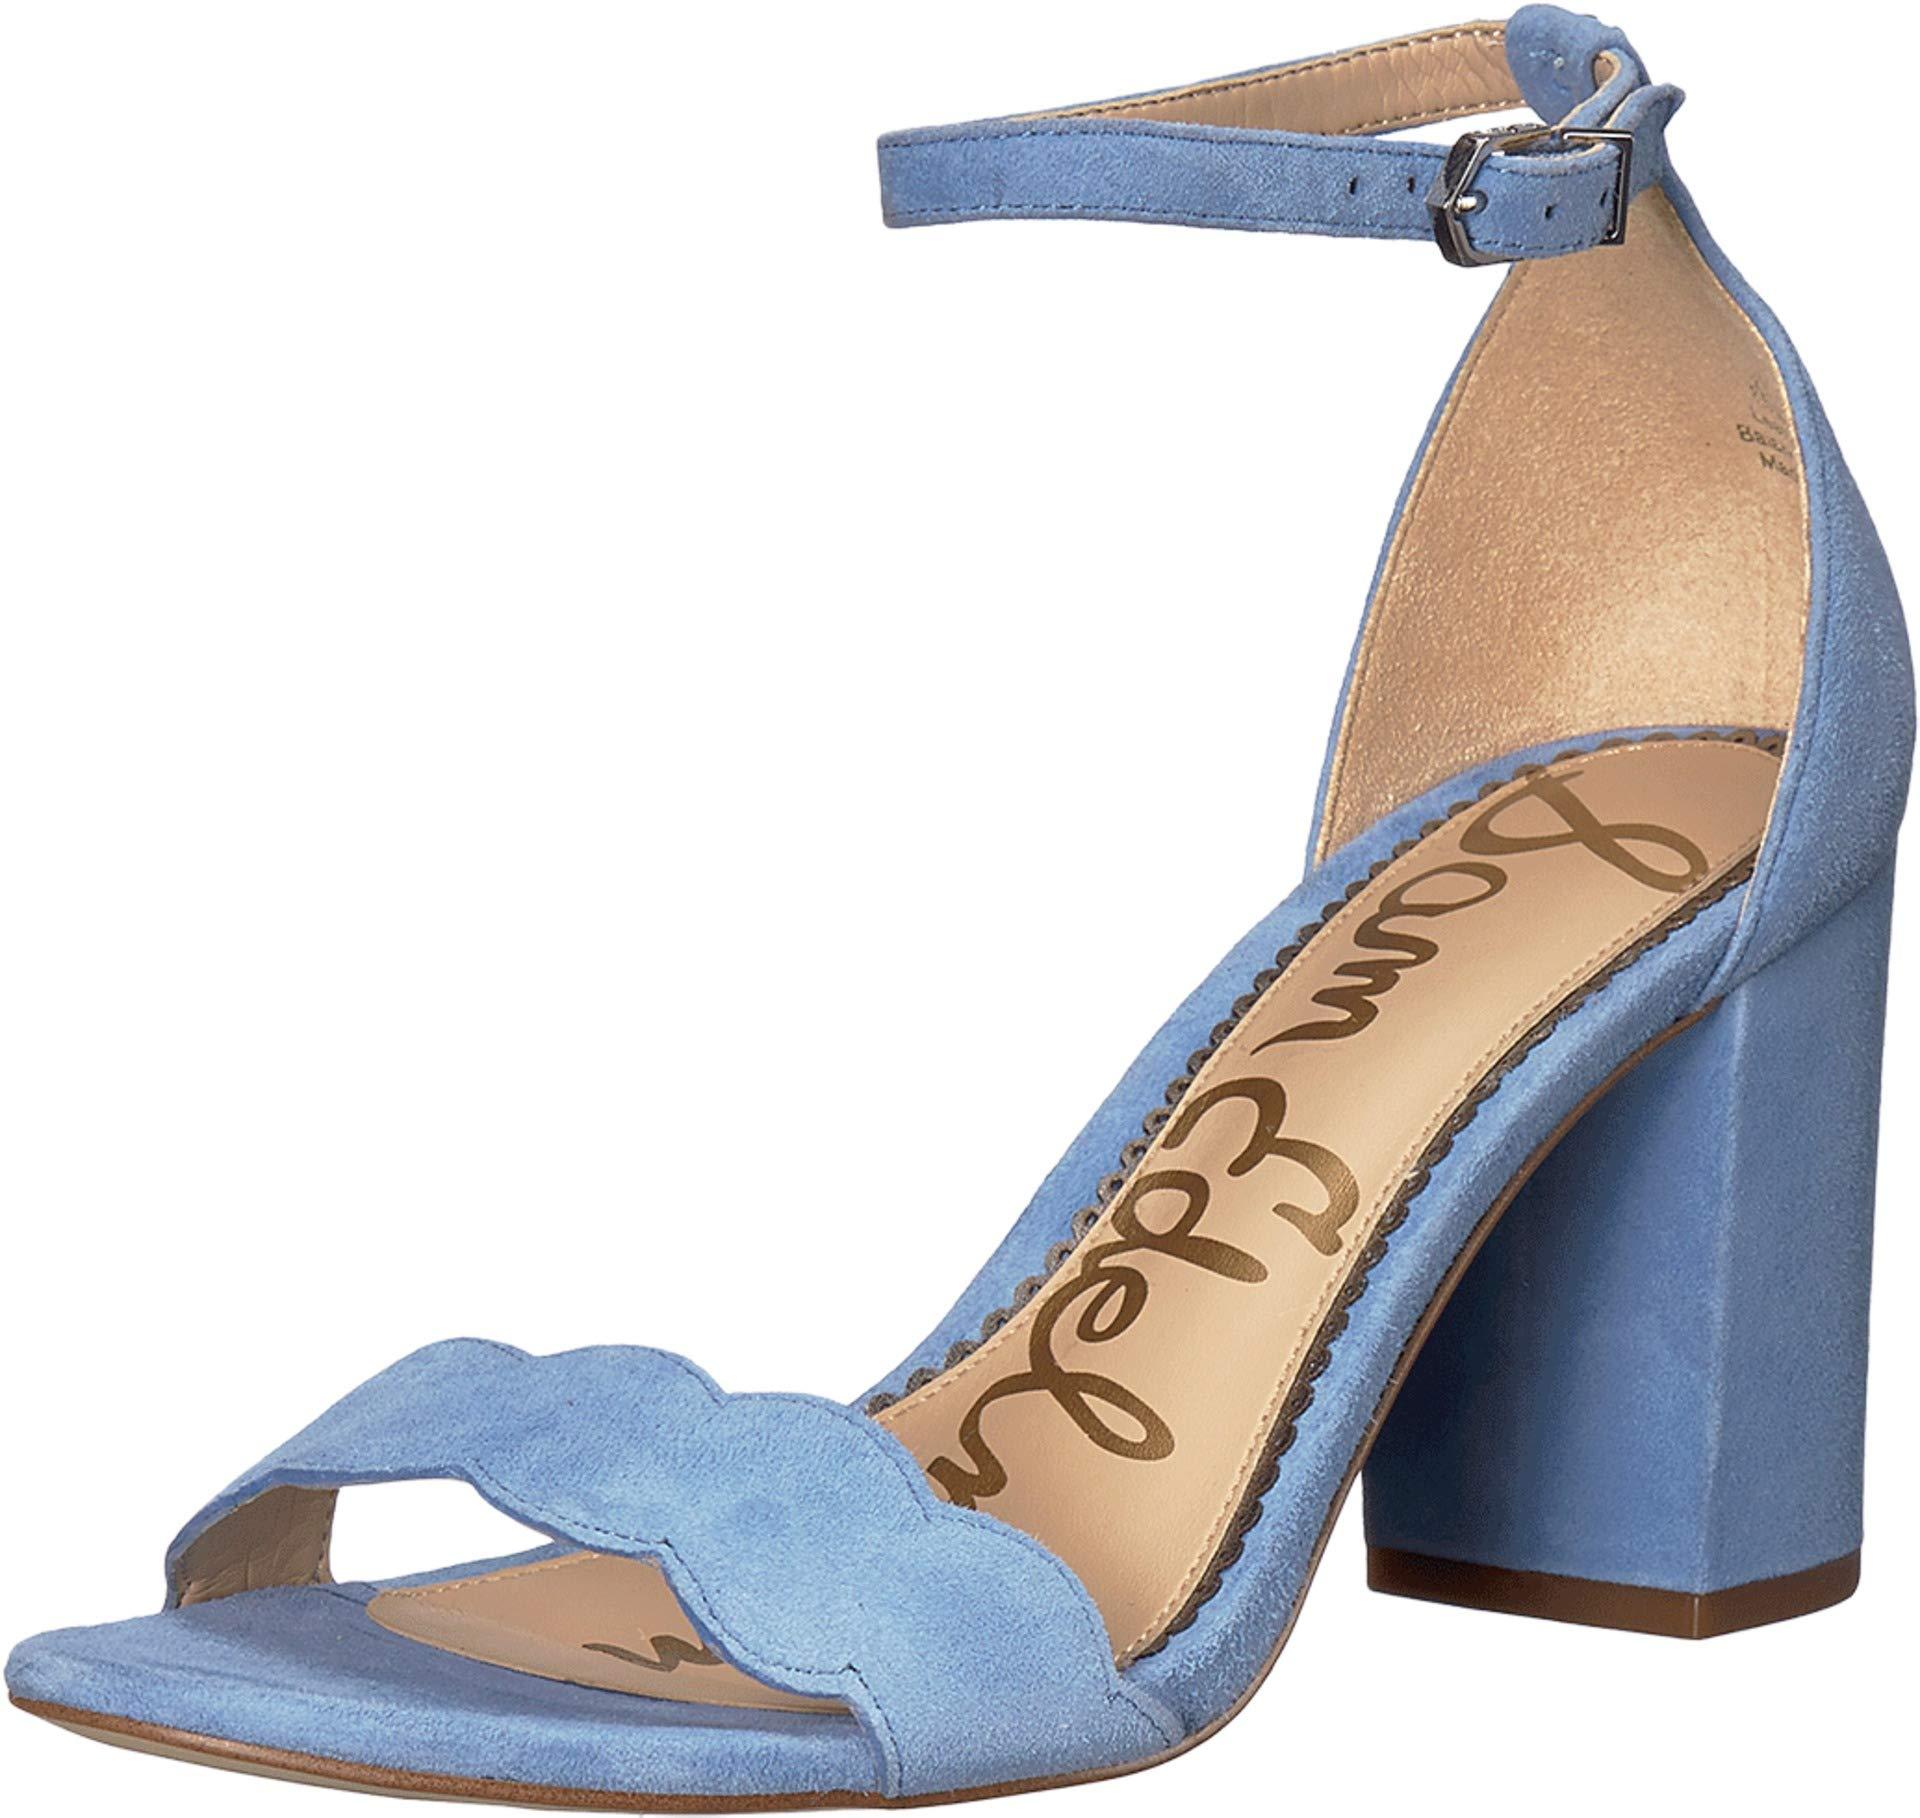 Sam Edelman Leather Odila Ankle Strap Sandal Heel in Blue - Lyst